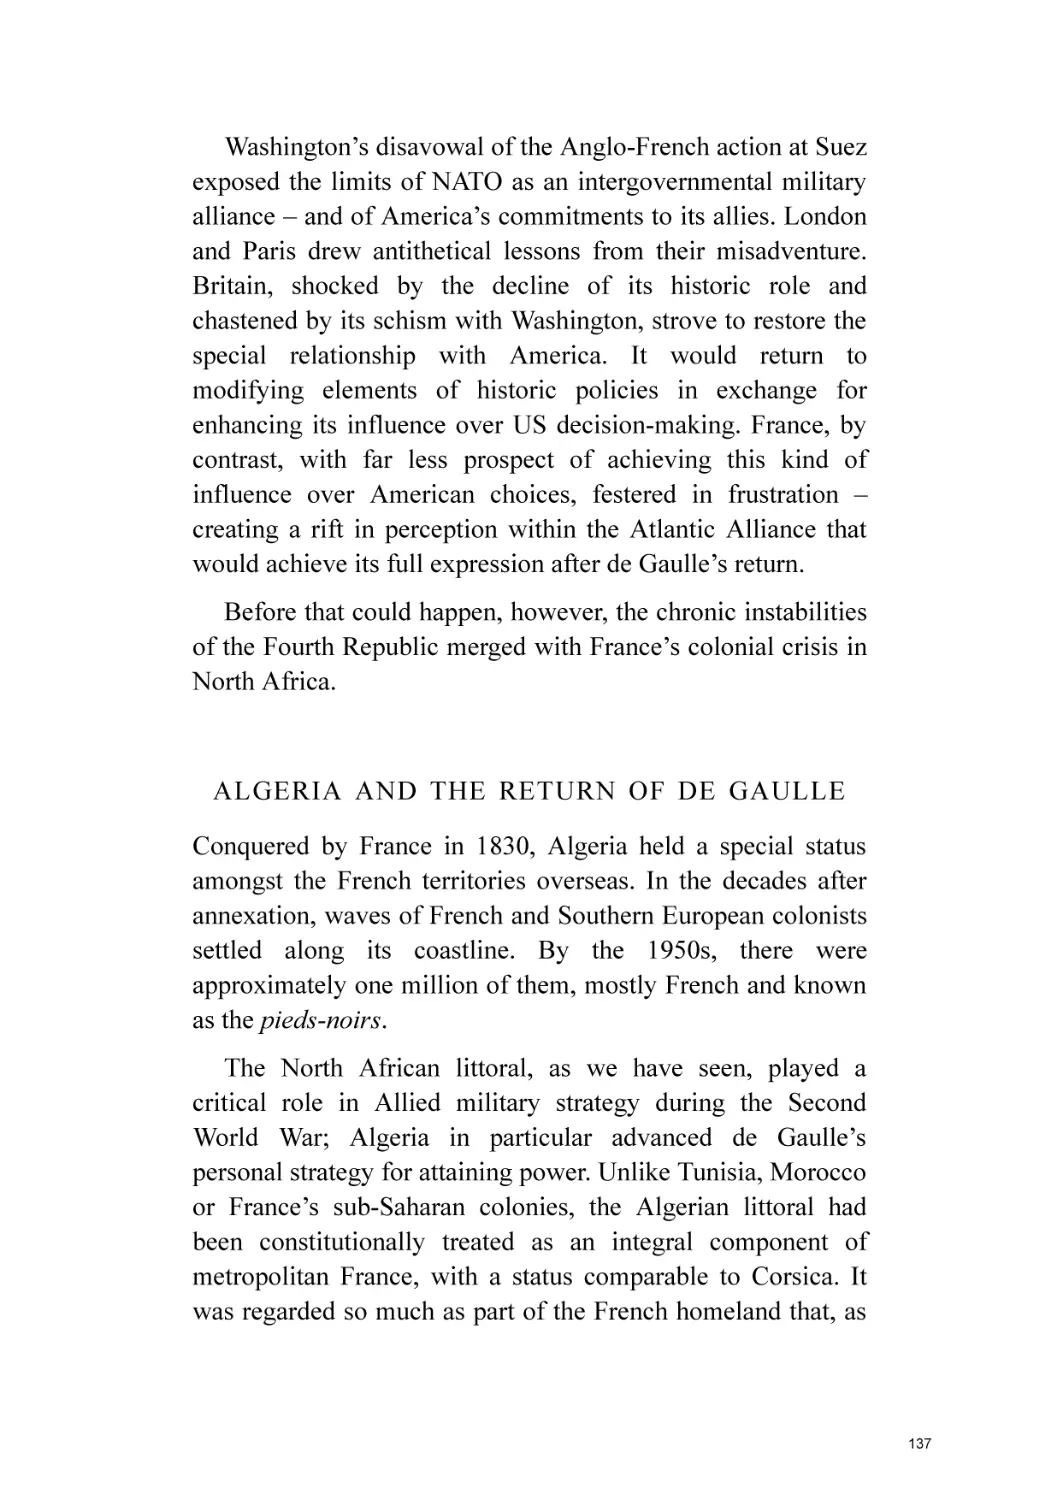 Algeria and the Return of de Gaulle